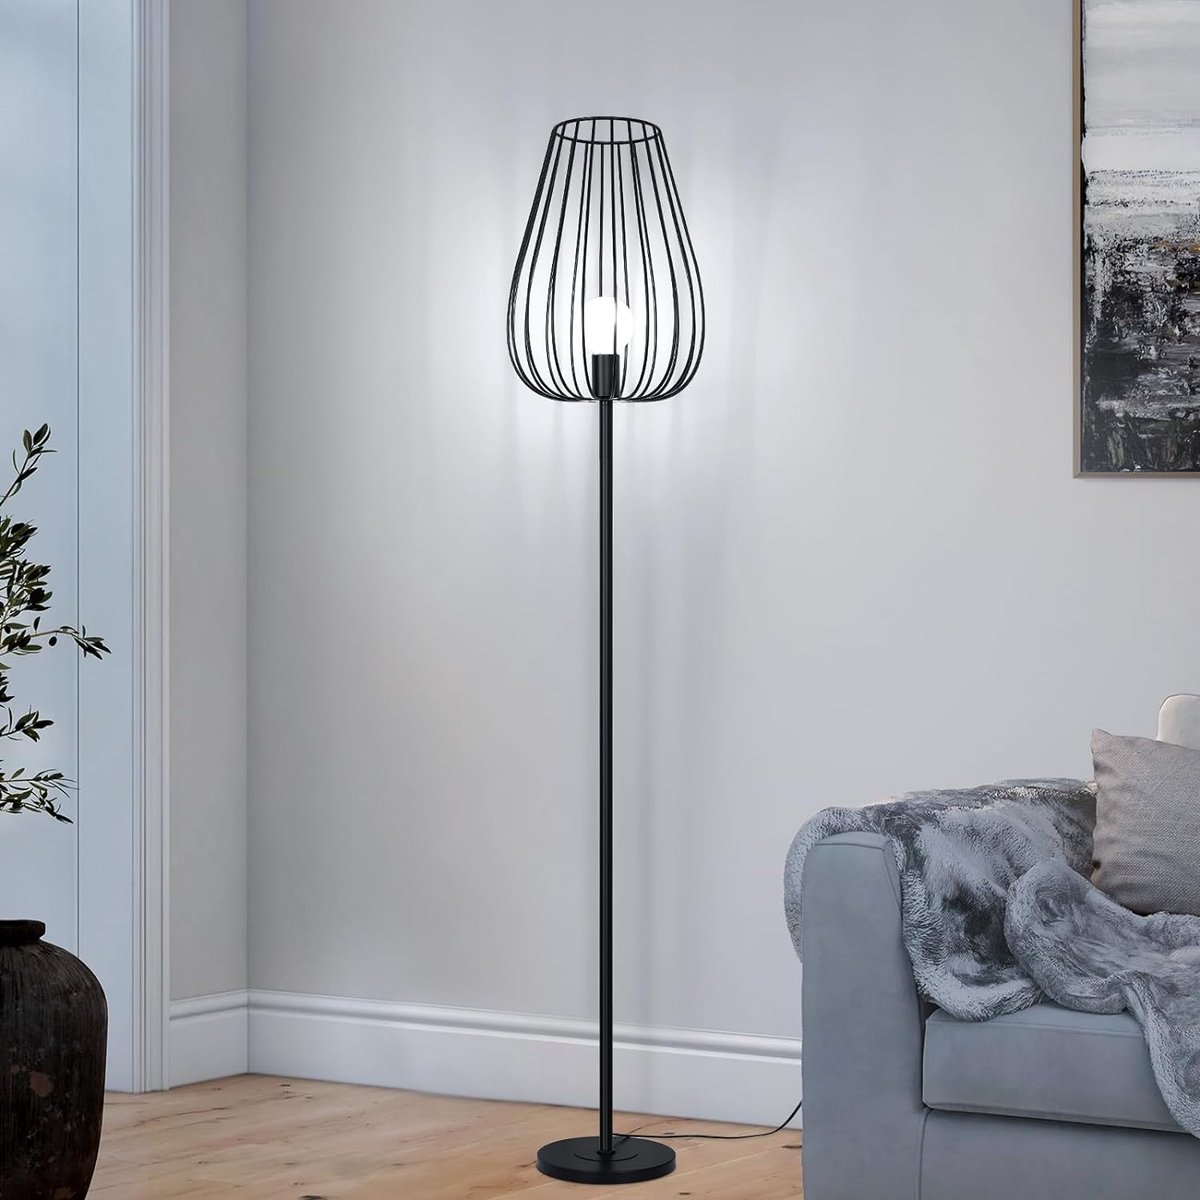 Goeco-Vloerlampen-Vintage-vloerlamp-met metalen kap-vloerlamp met voetschakelaar-zwart-metalen-woonkamerlamp-E27-fitting vloerlamp-zonder lamp-156CM